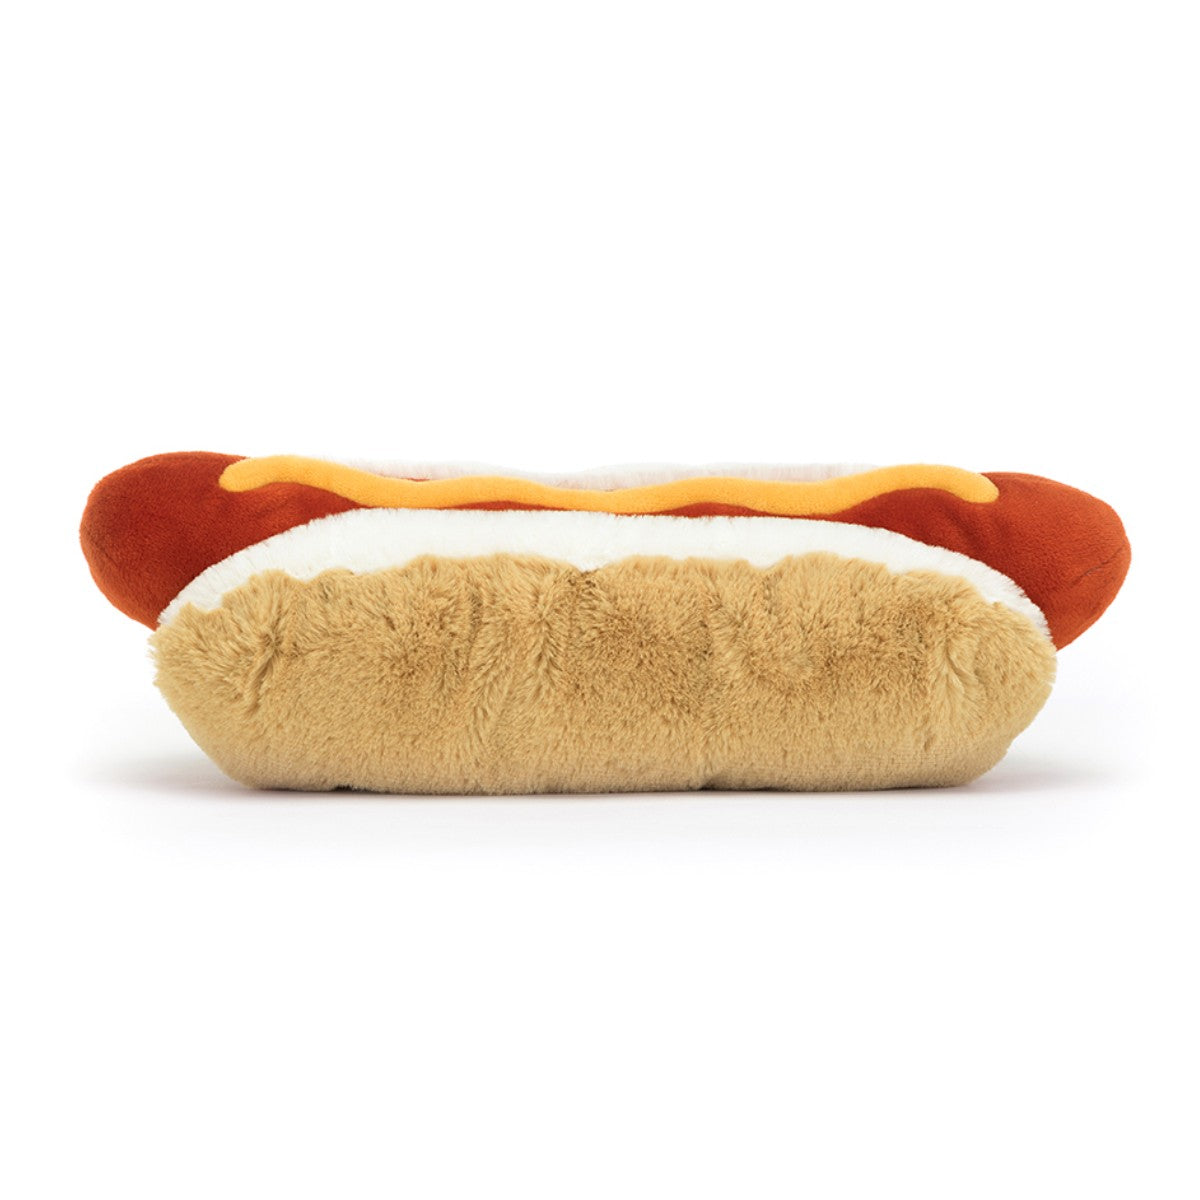 Jellycat Amuseable Hot Dog, 11 cm